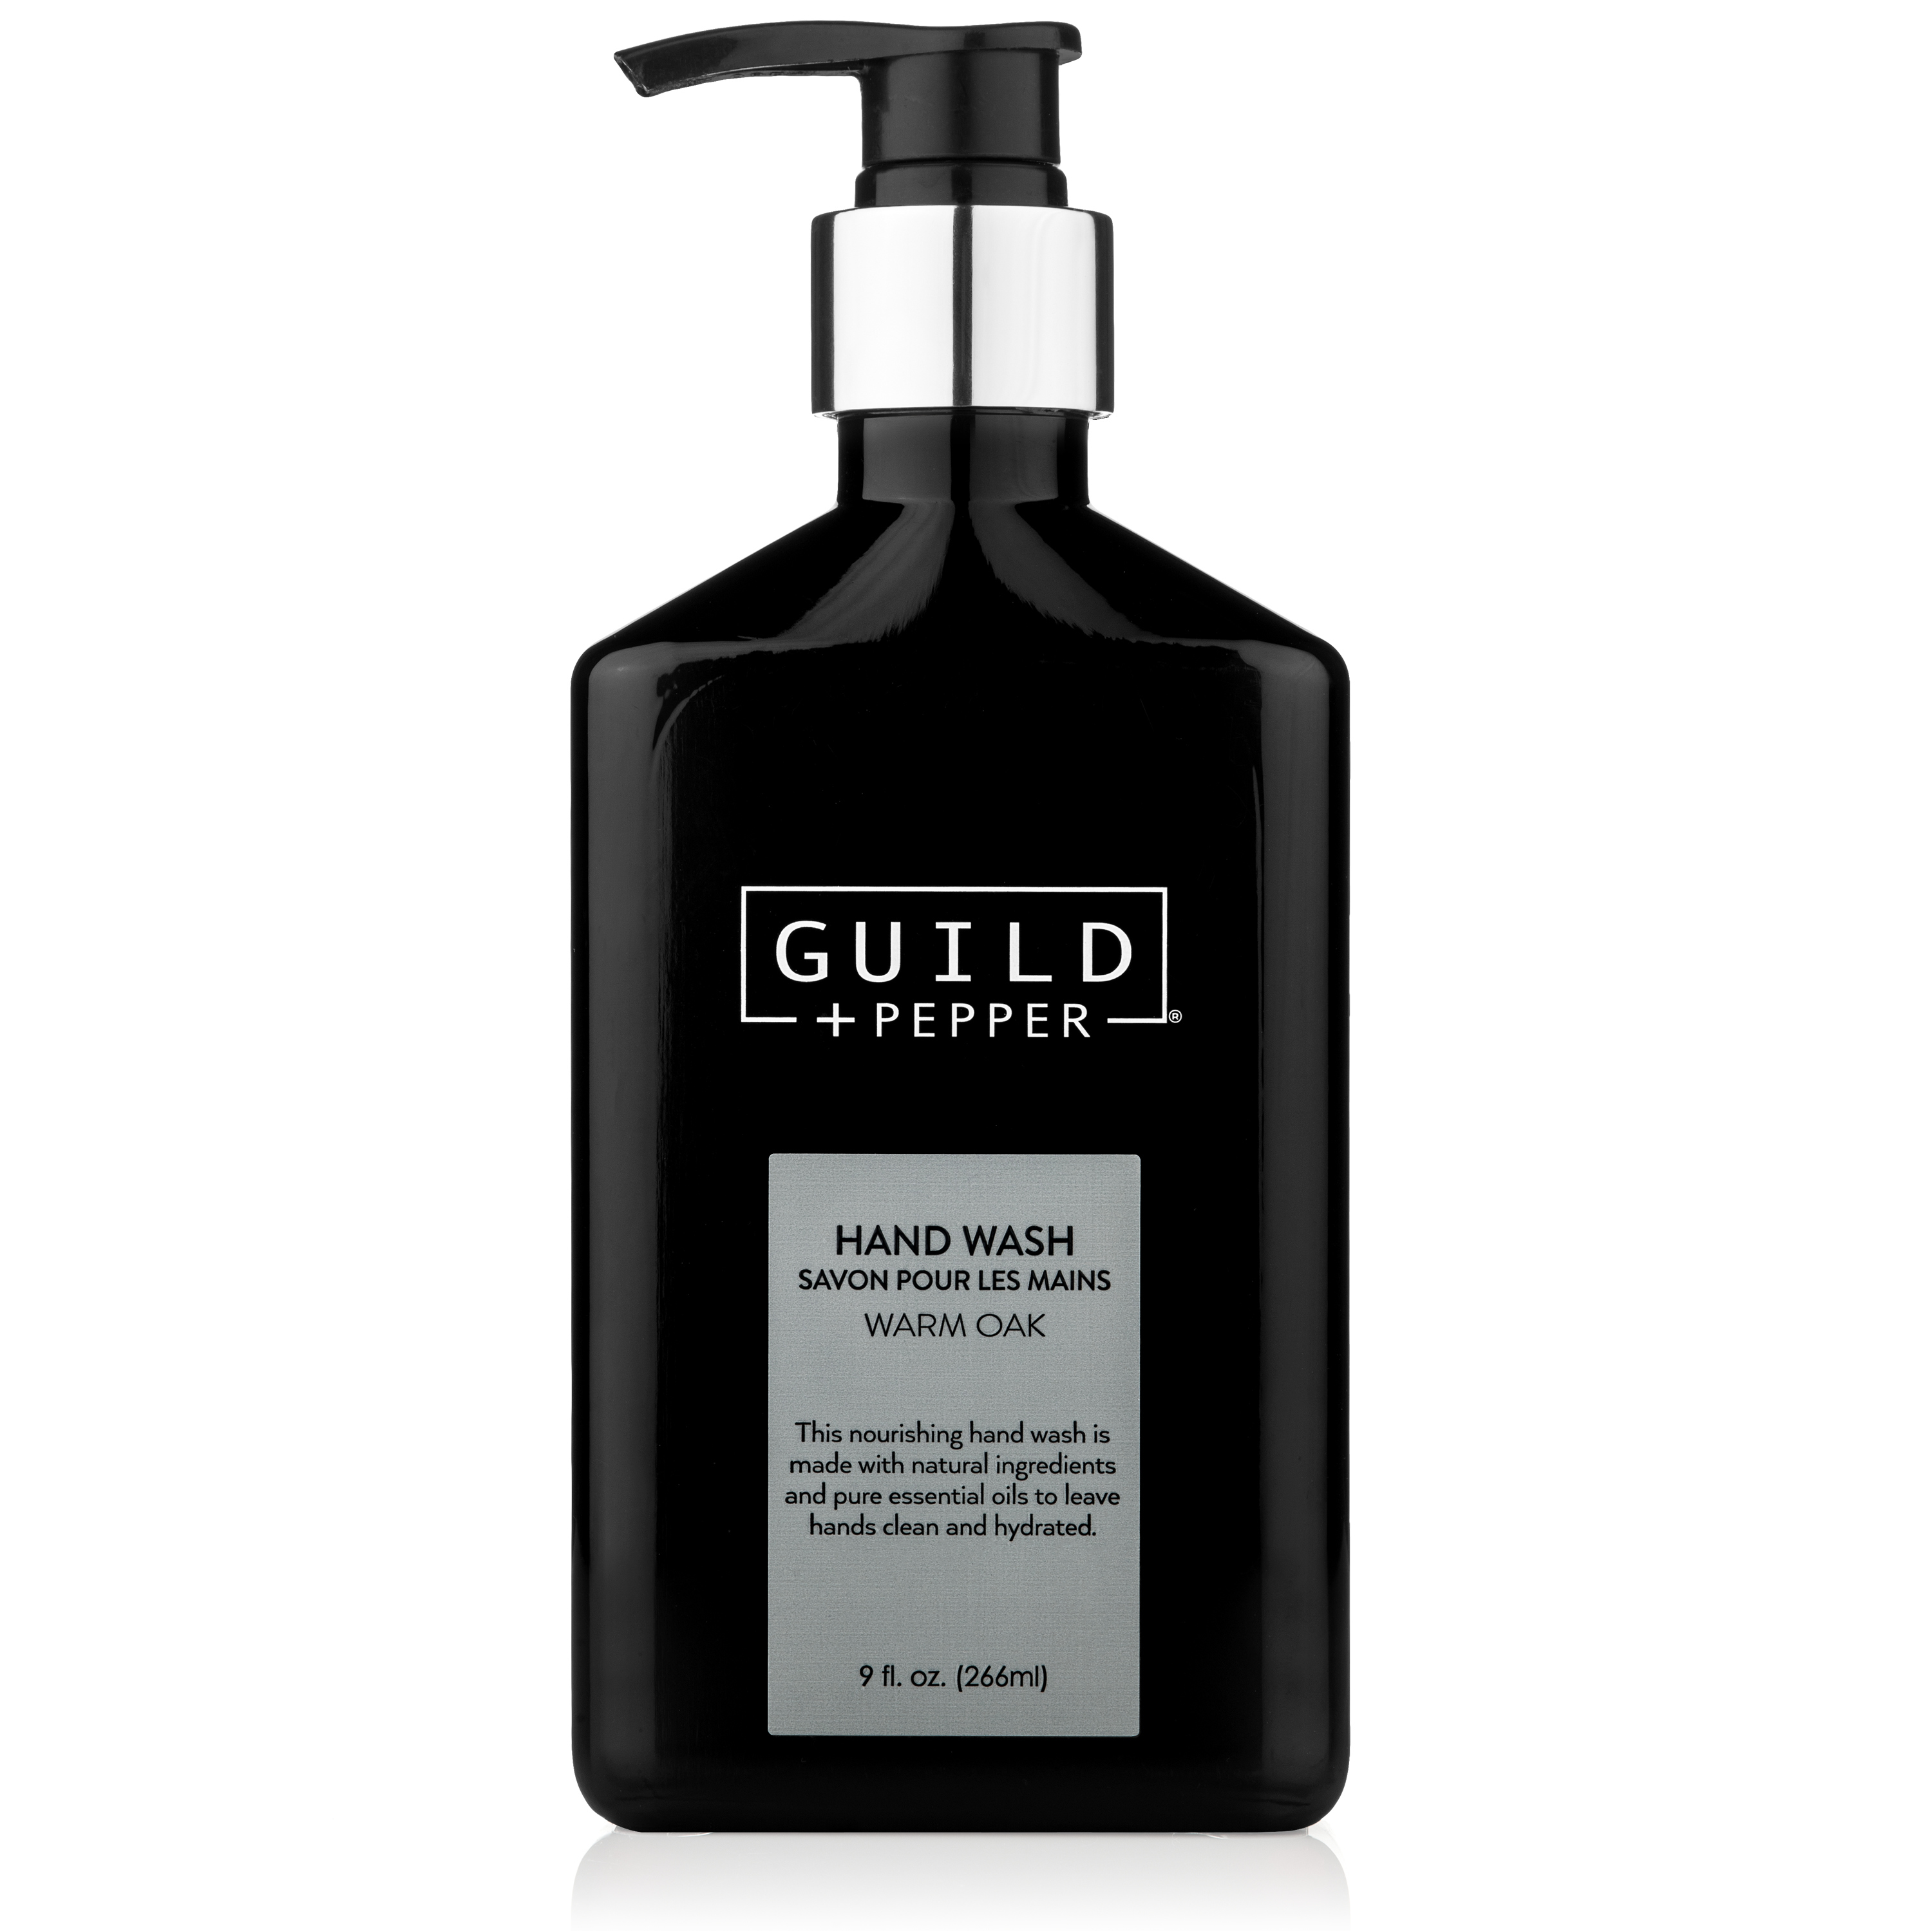 Guild+Pepper Hand Wash | Gilchrist & Soames